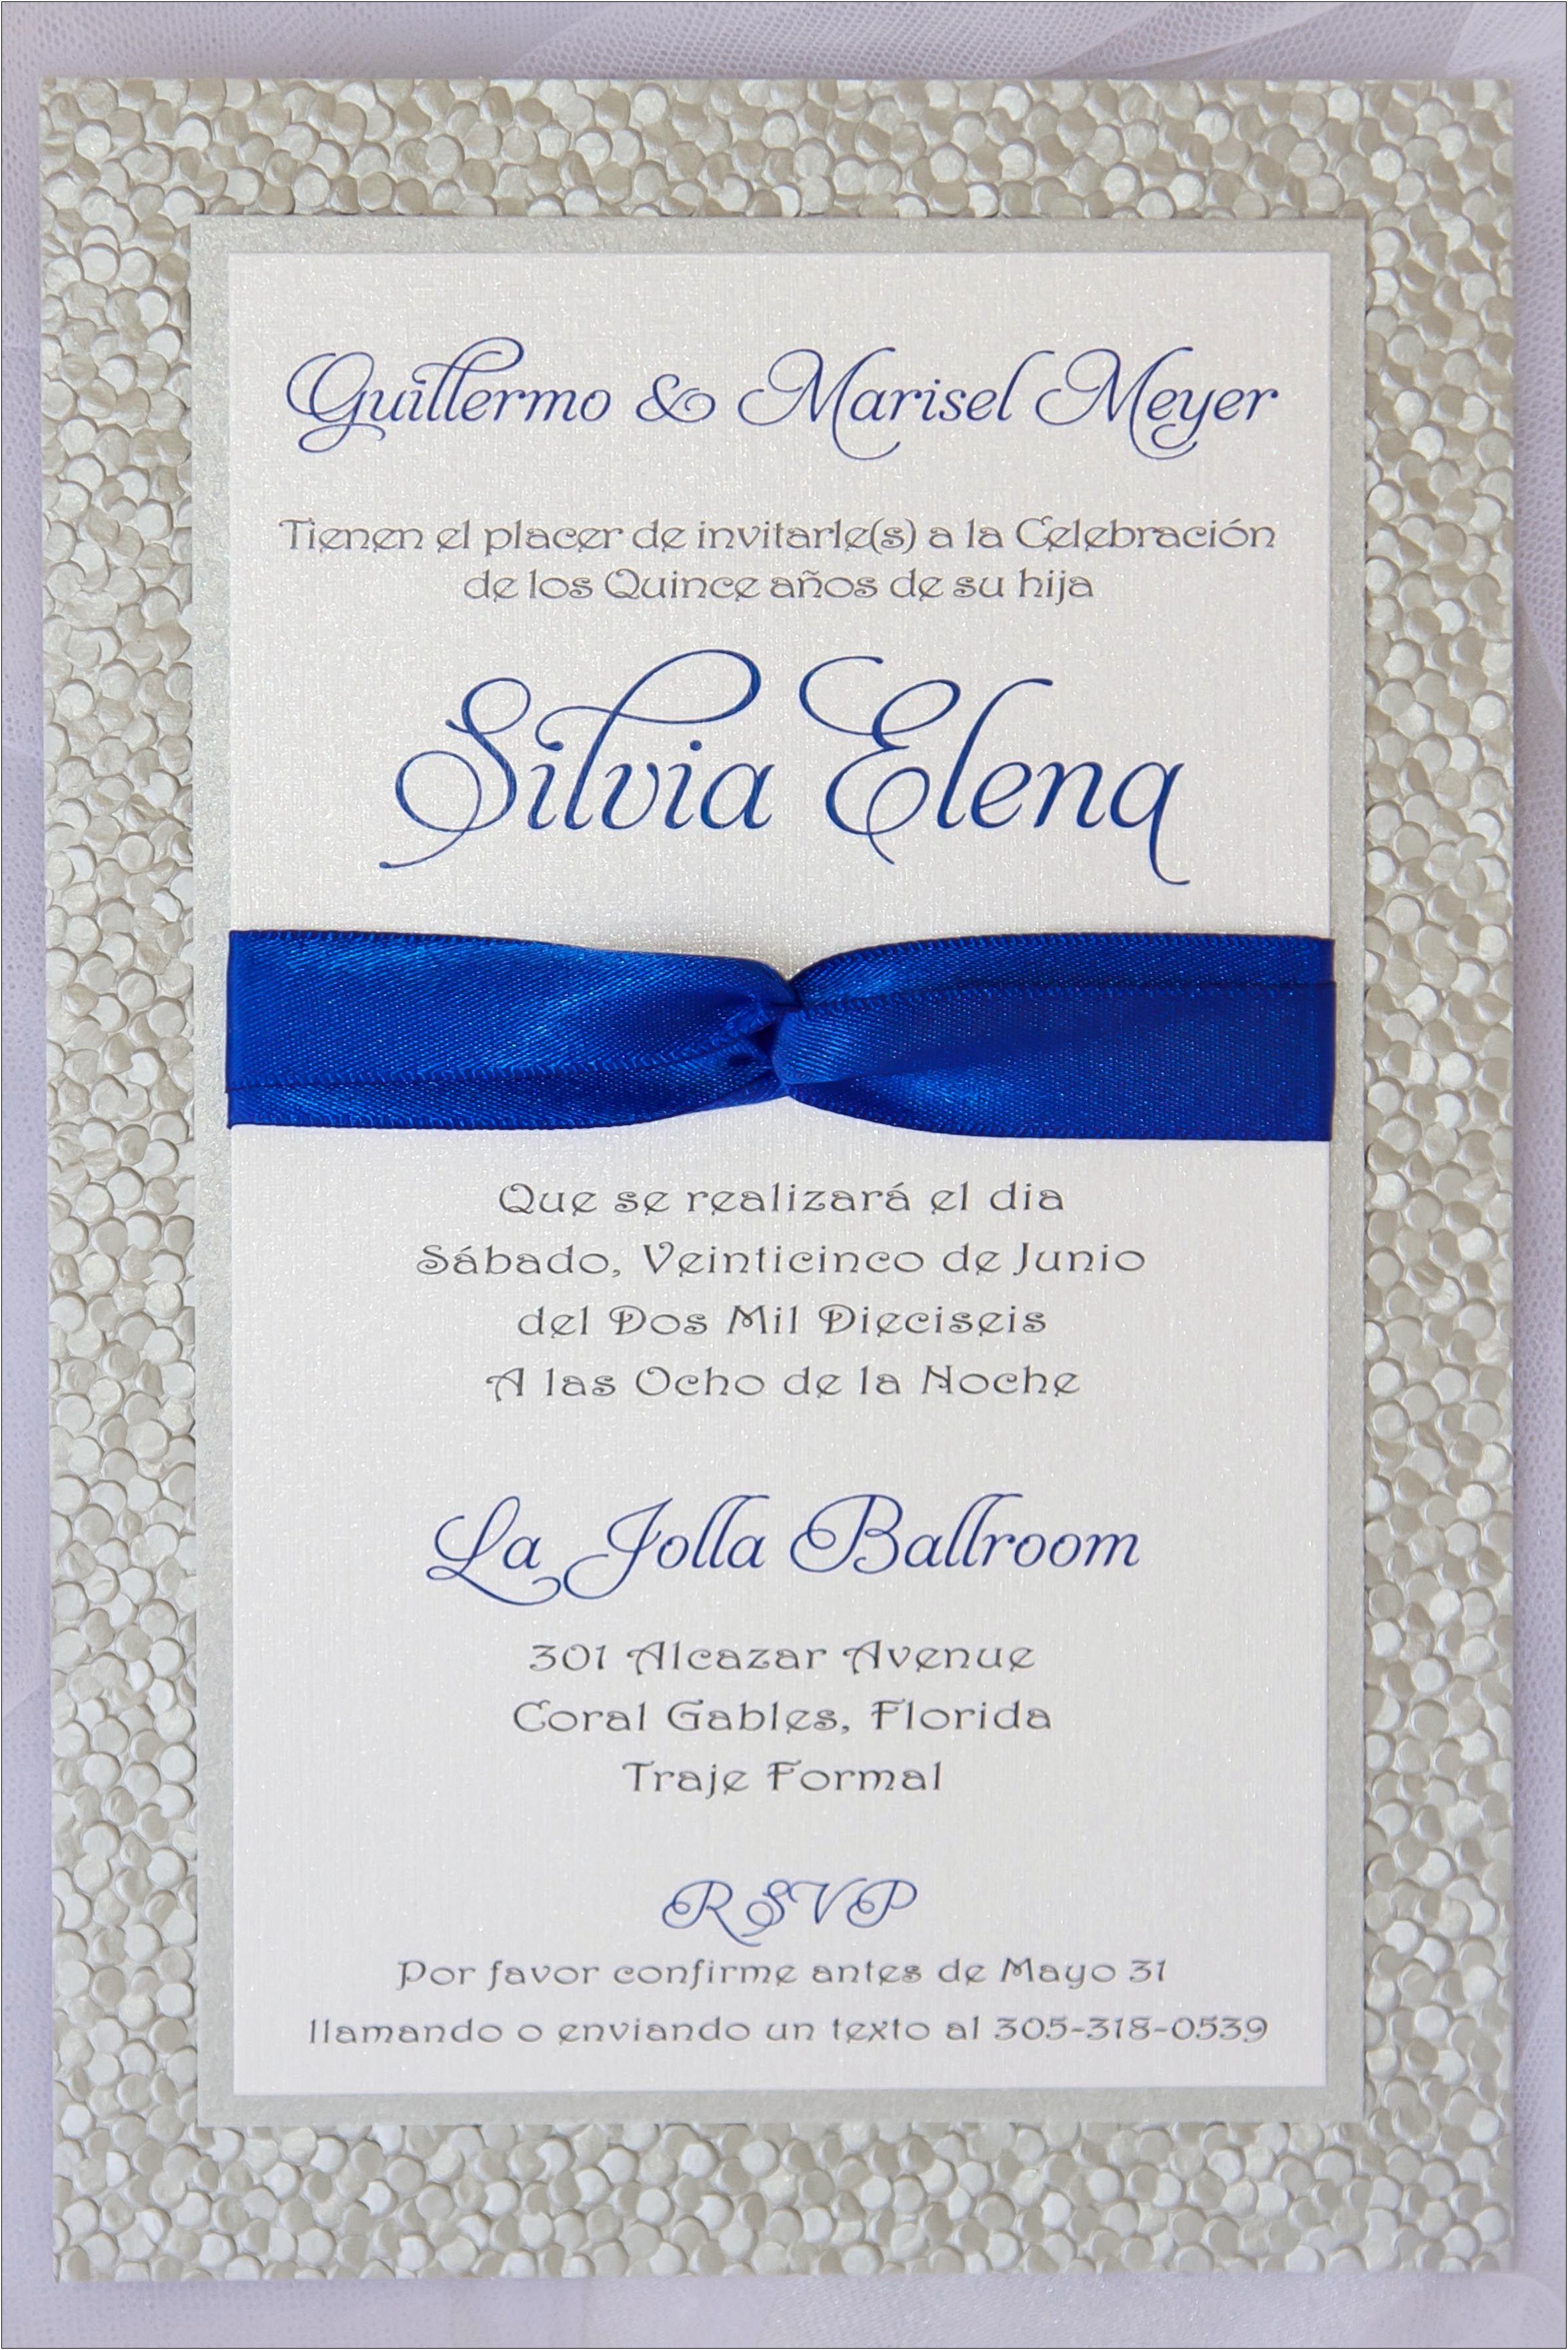 Lilian Designs Wedding Invitations Coral Gables Fl